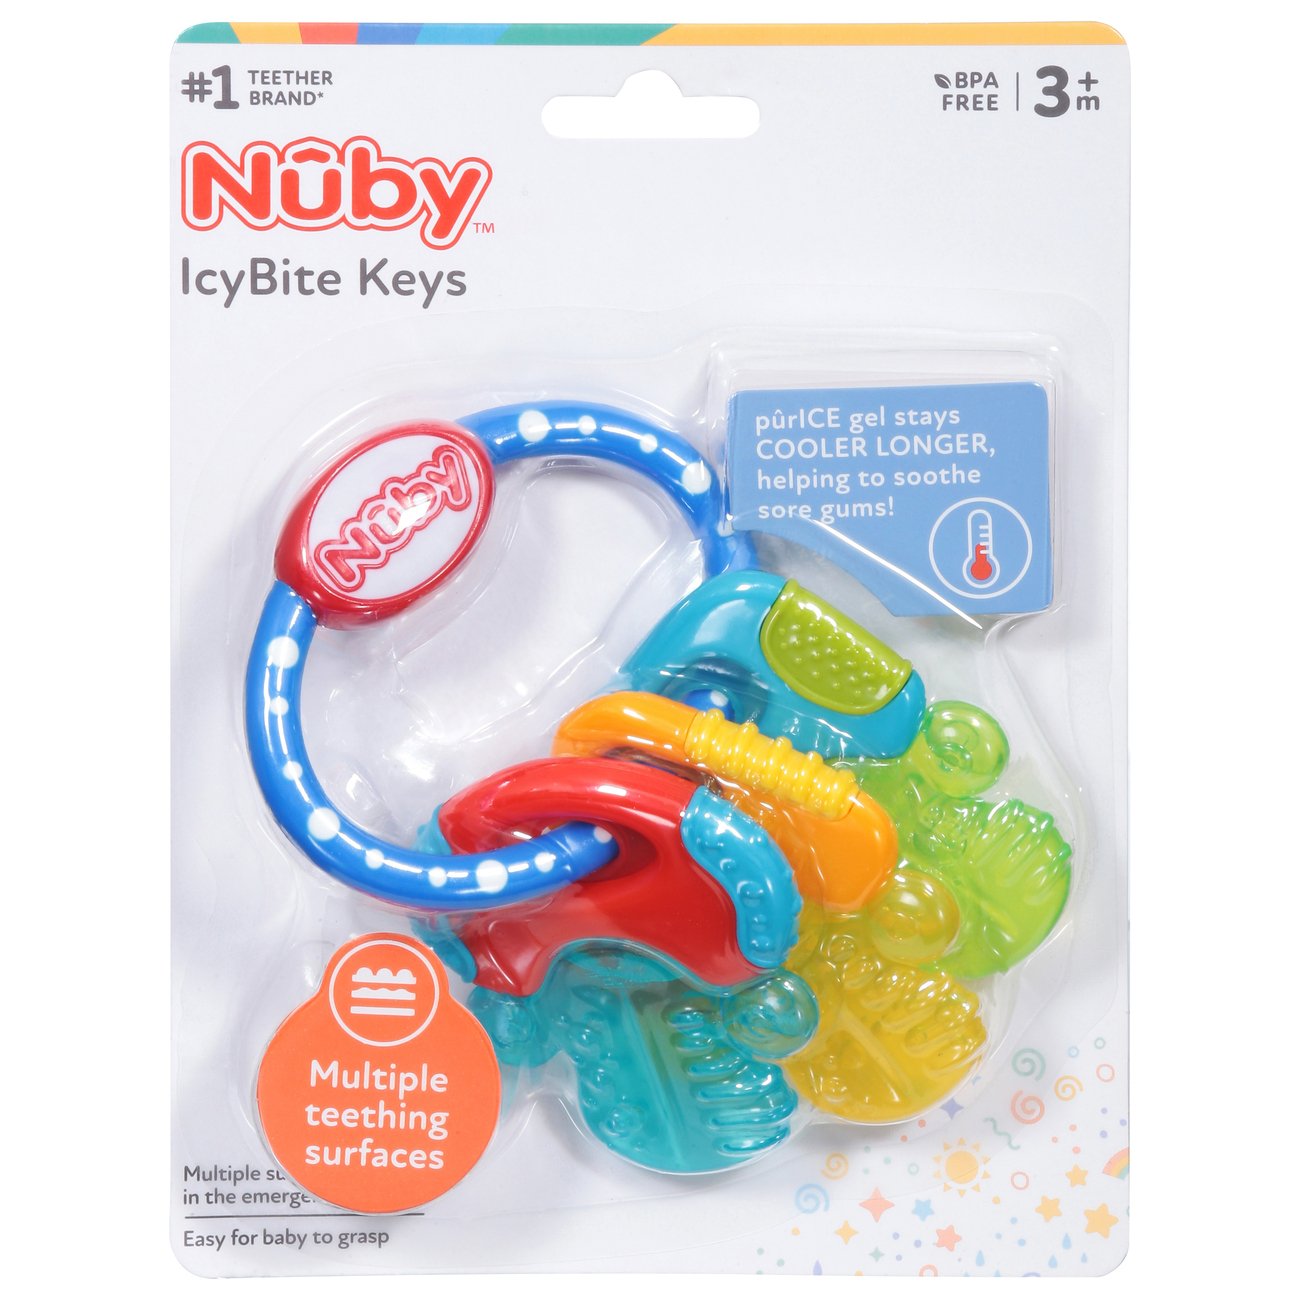 Nuby Bug A Loop Teether Ring Toy Soothe Baby Gums New Eruption Teeth BPA FREE 3+ 